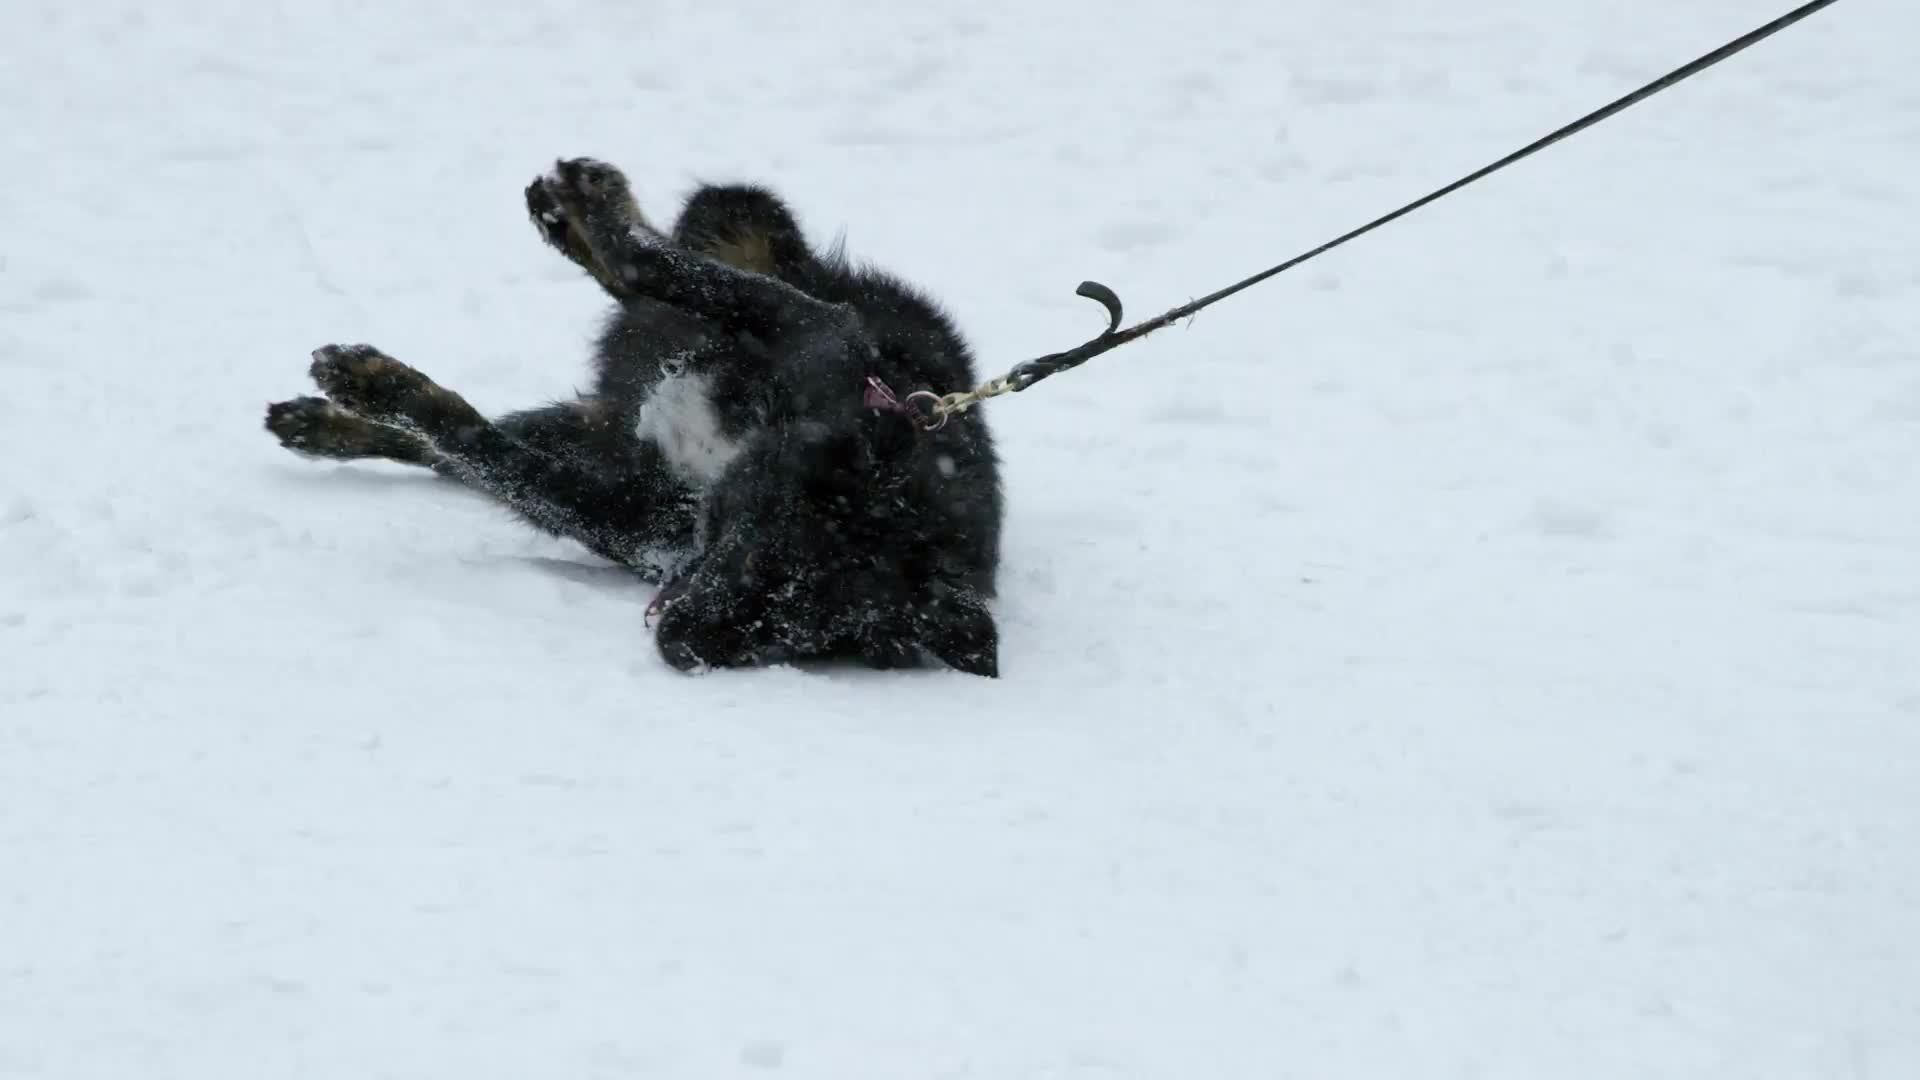 black dog rolling around in snow in winter blizzard - snowing slow motion 4K